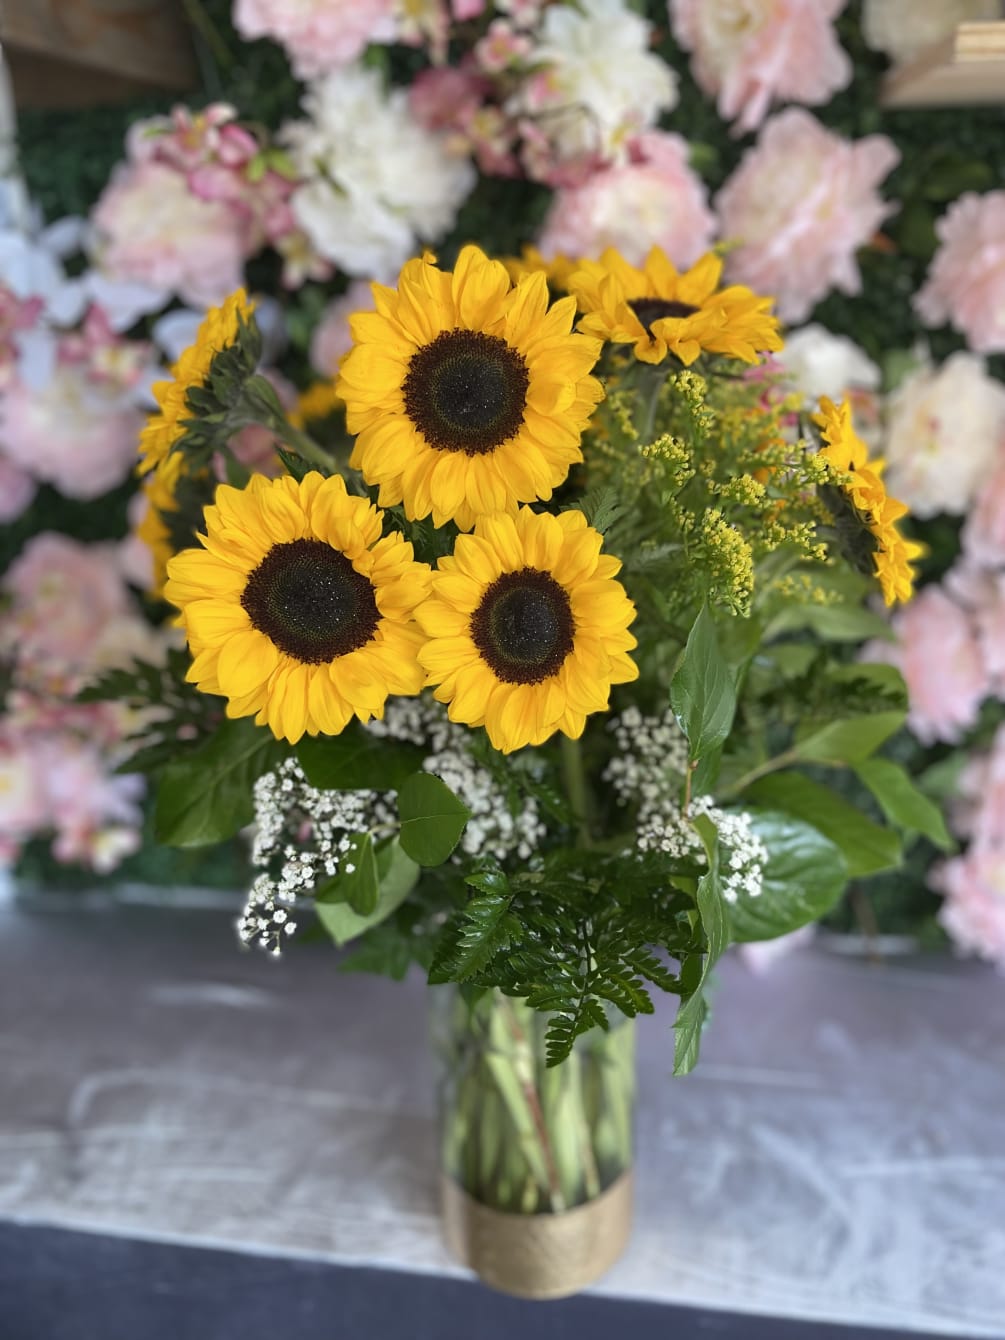 This gorgeous arrangement has sunflowers and fresh yellow saladeigo.